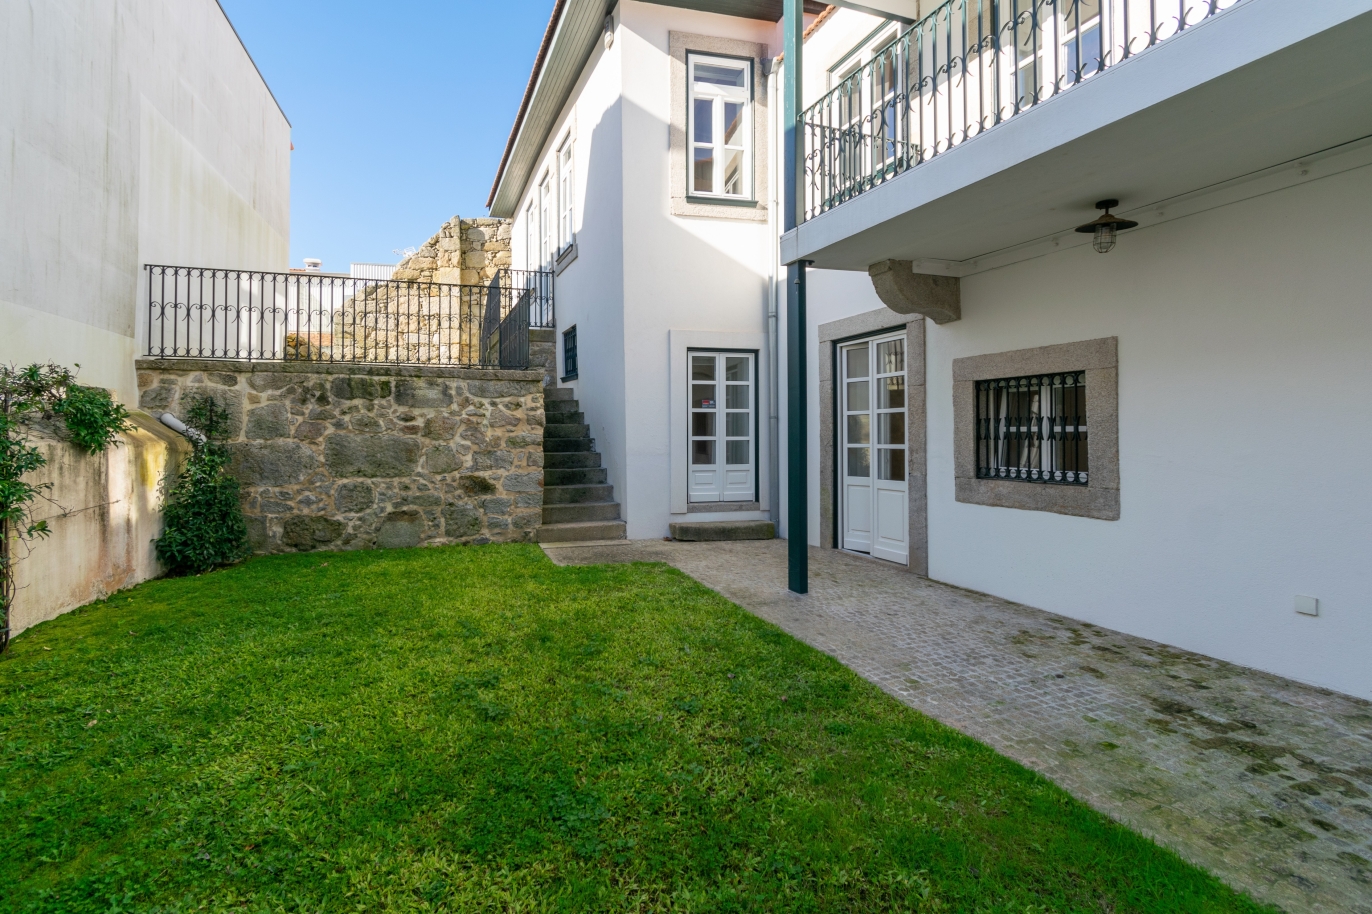 Fantastique villa rénovée à vendre à Foz Velha, Porto, Portugal_246626